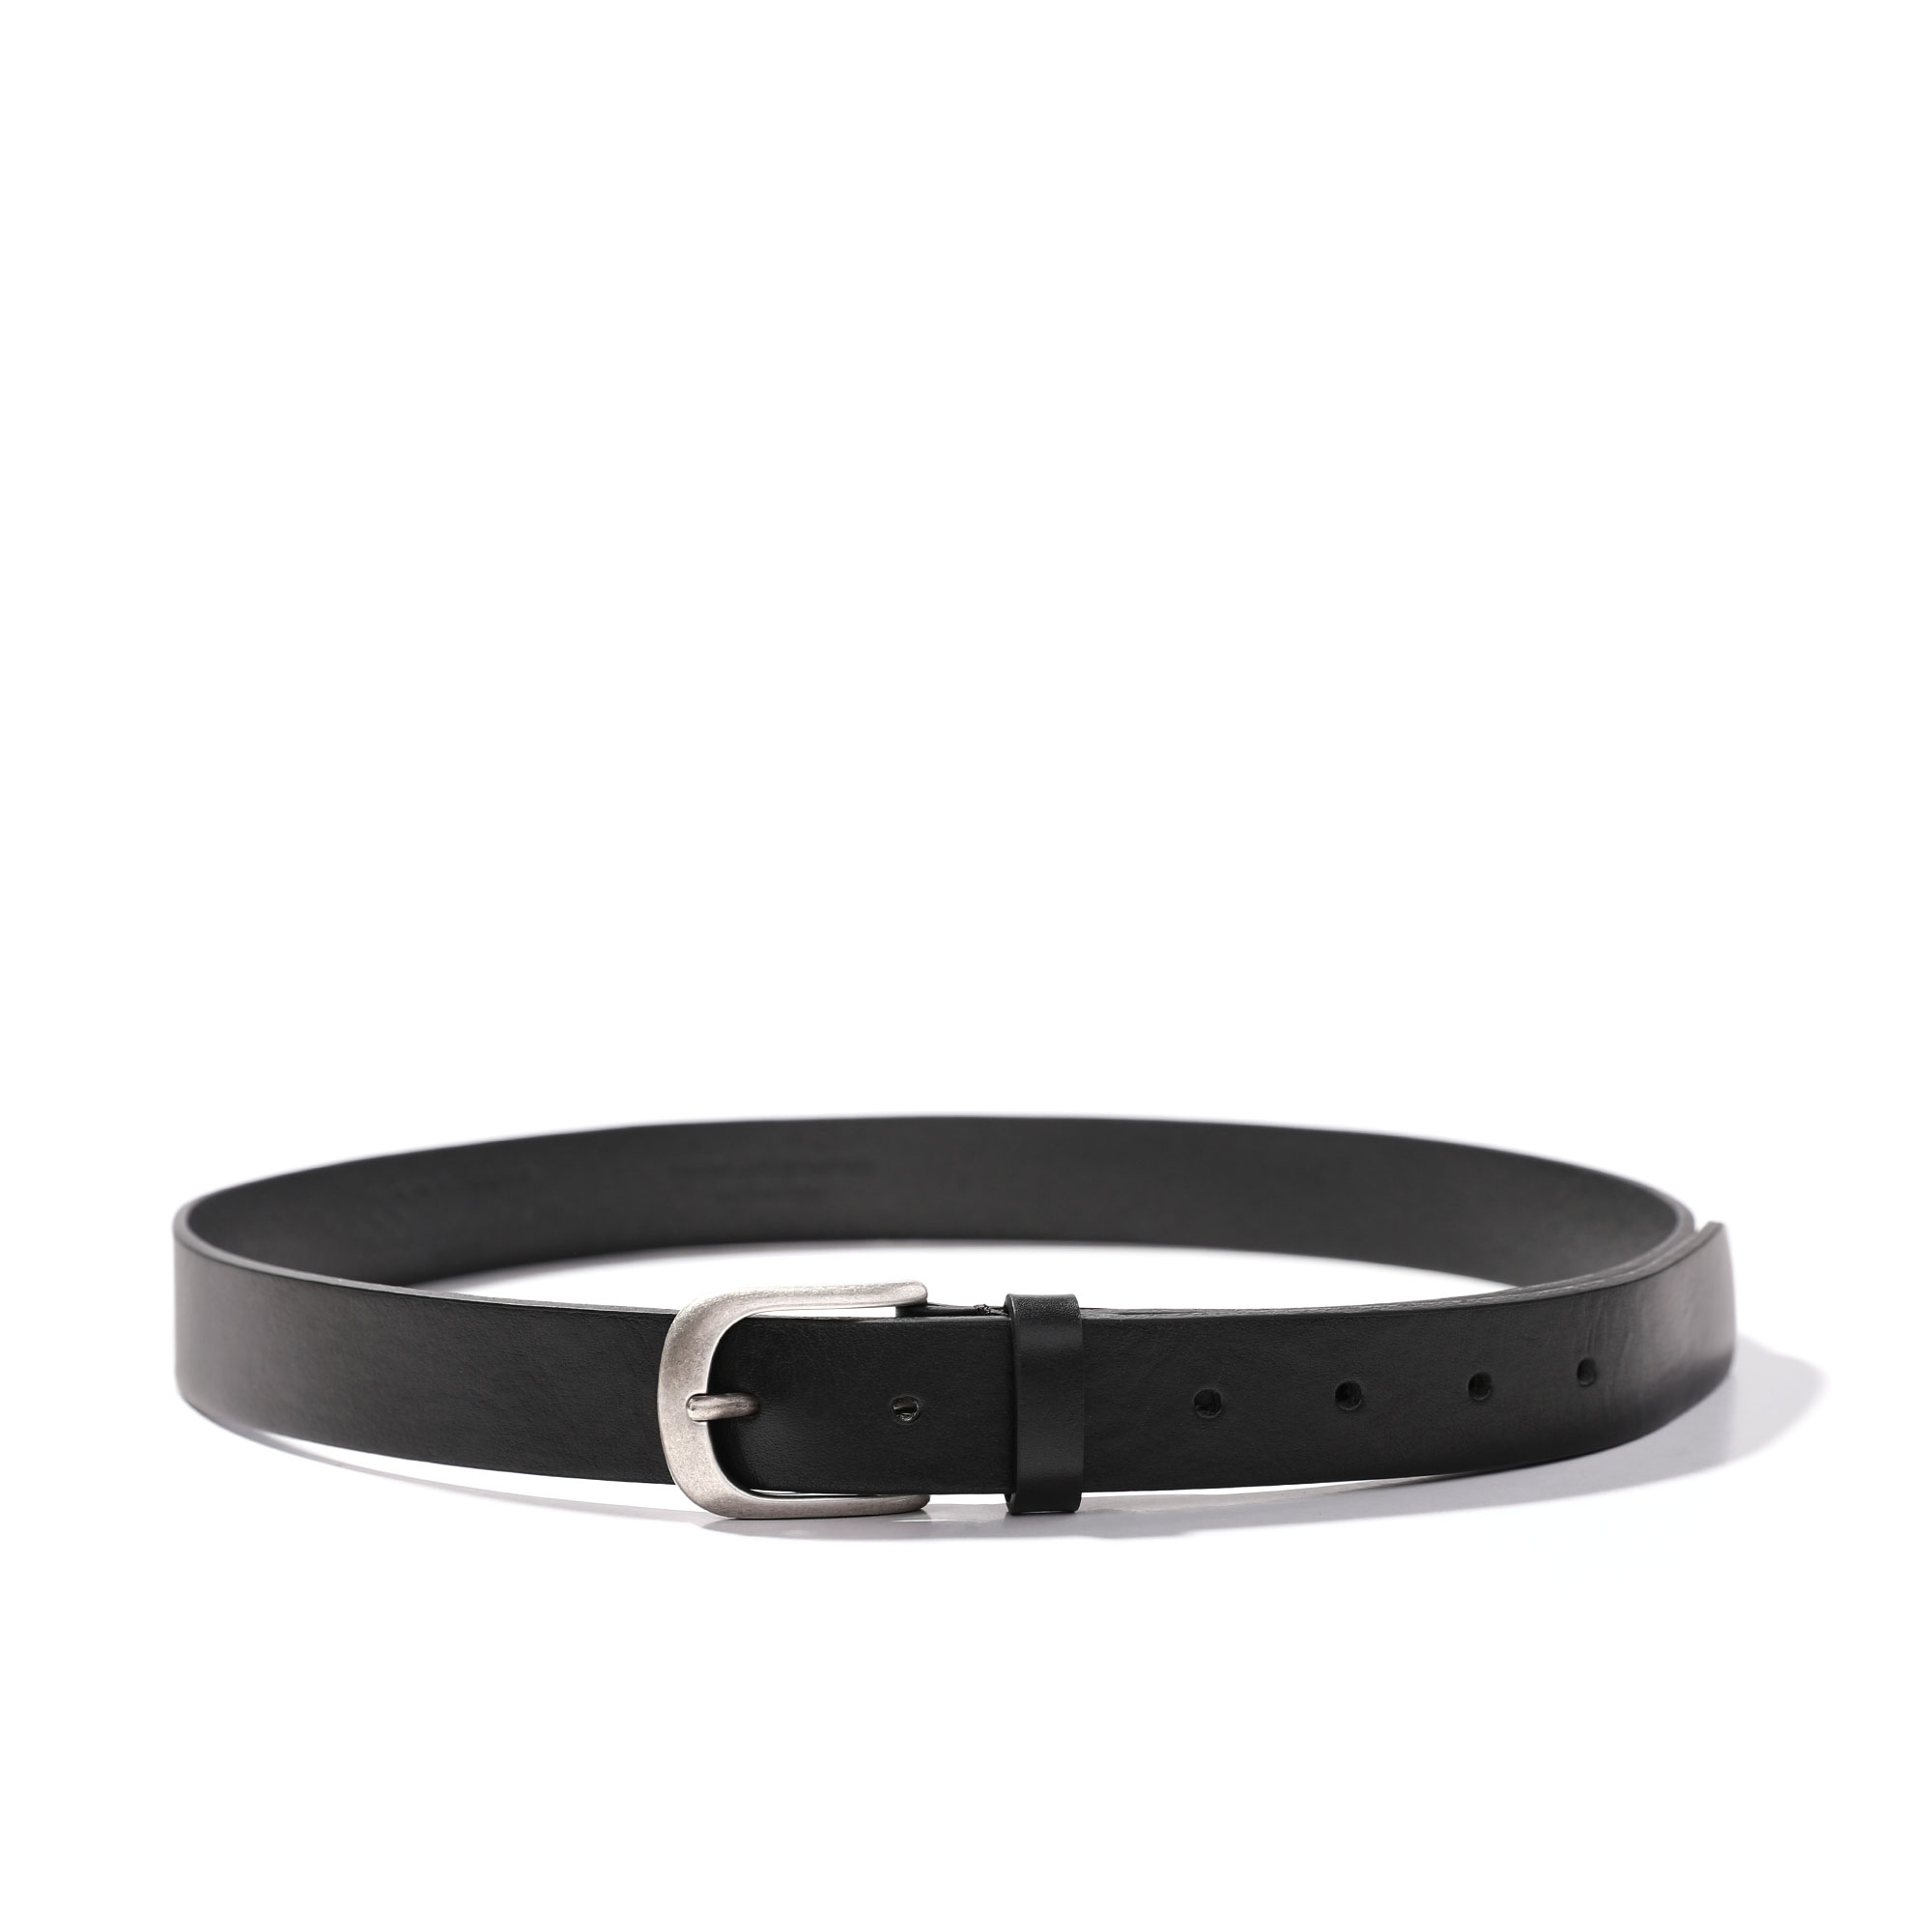 classic vera pelle leather belt / black